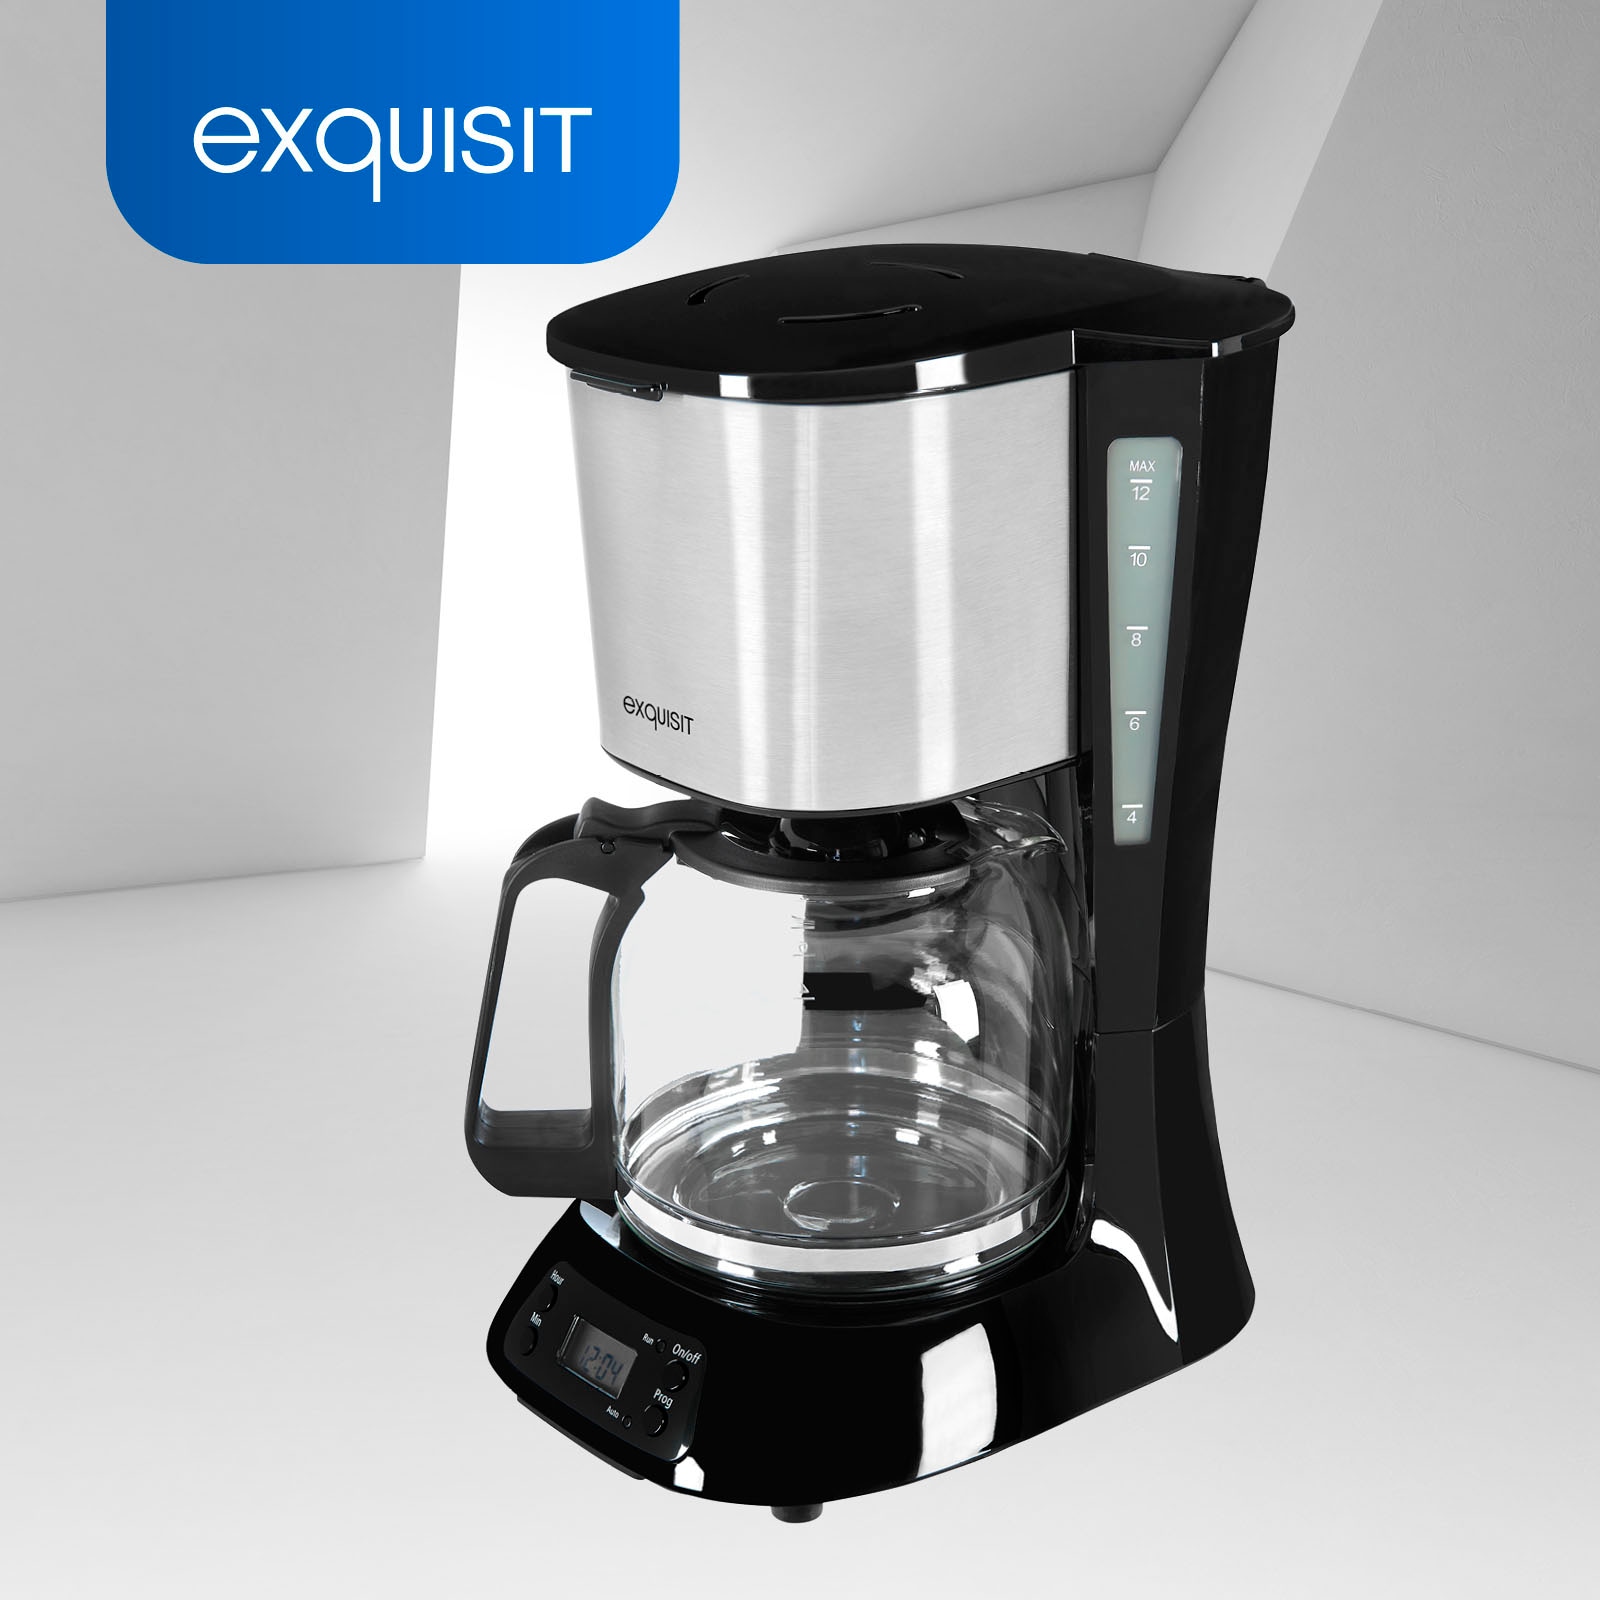 exquisit Filterkaffeemaschine »KA 6119 jetzt 1,5 Shop 1x4 isw«, Online im OTTO Kaffeekanne, Papierfilter, l